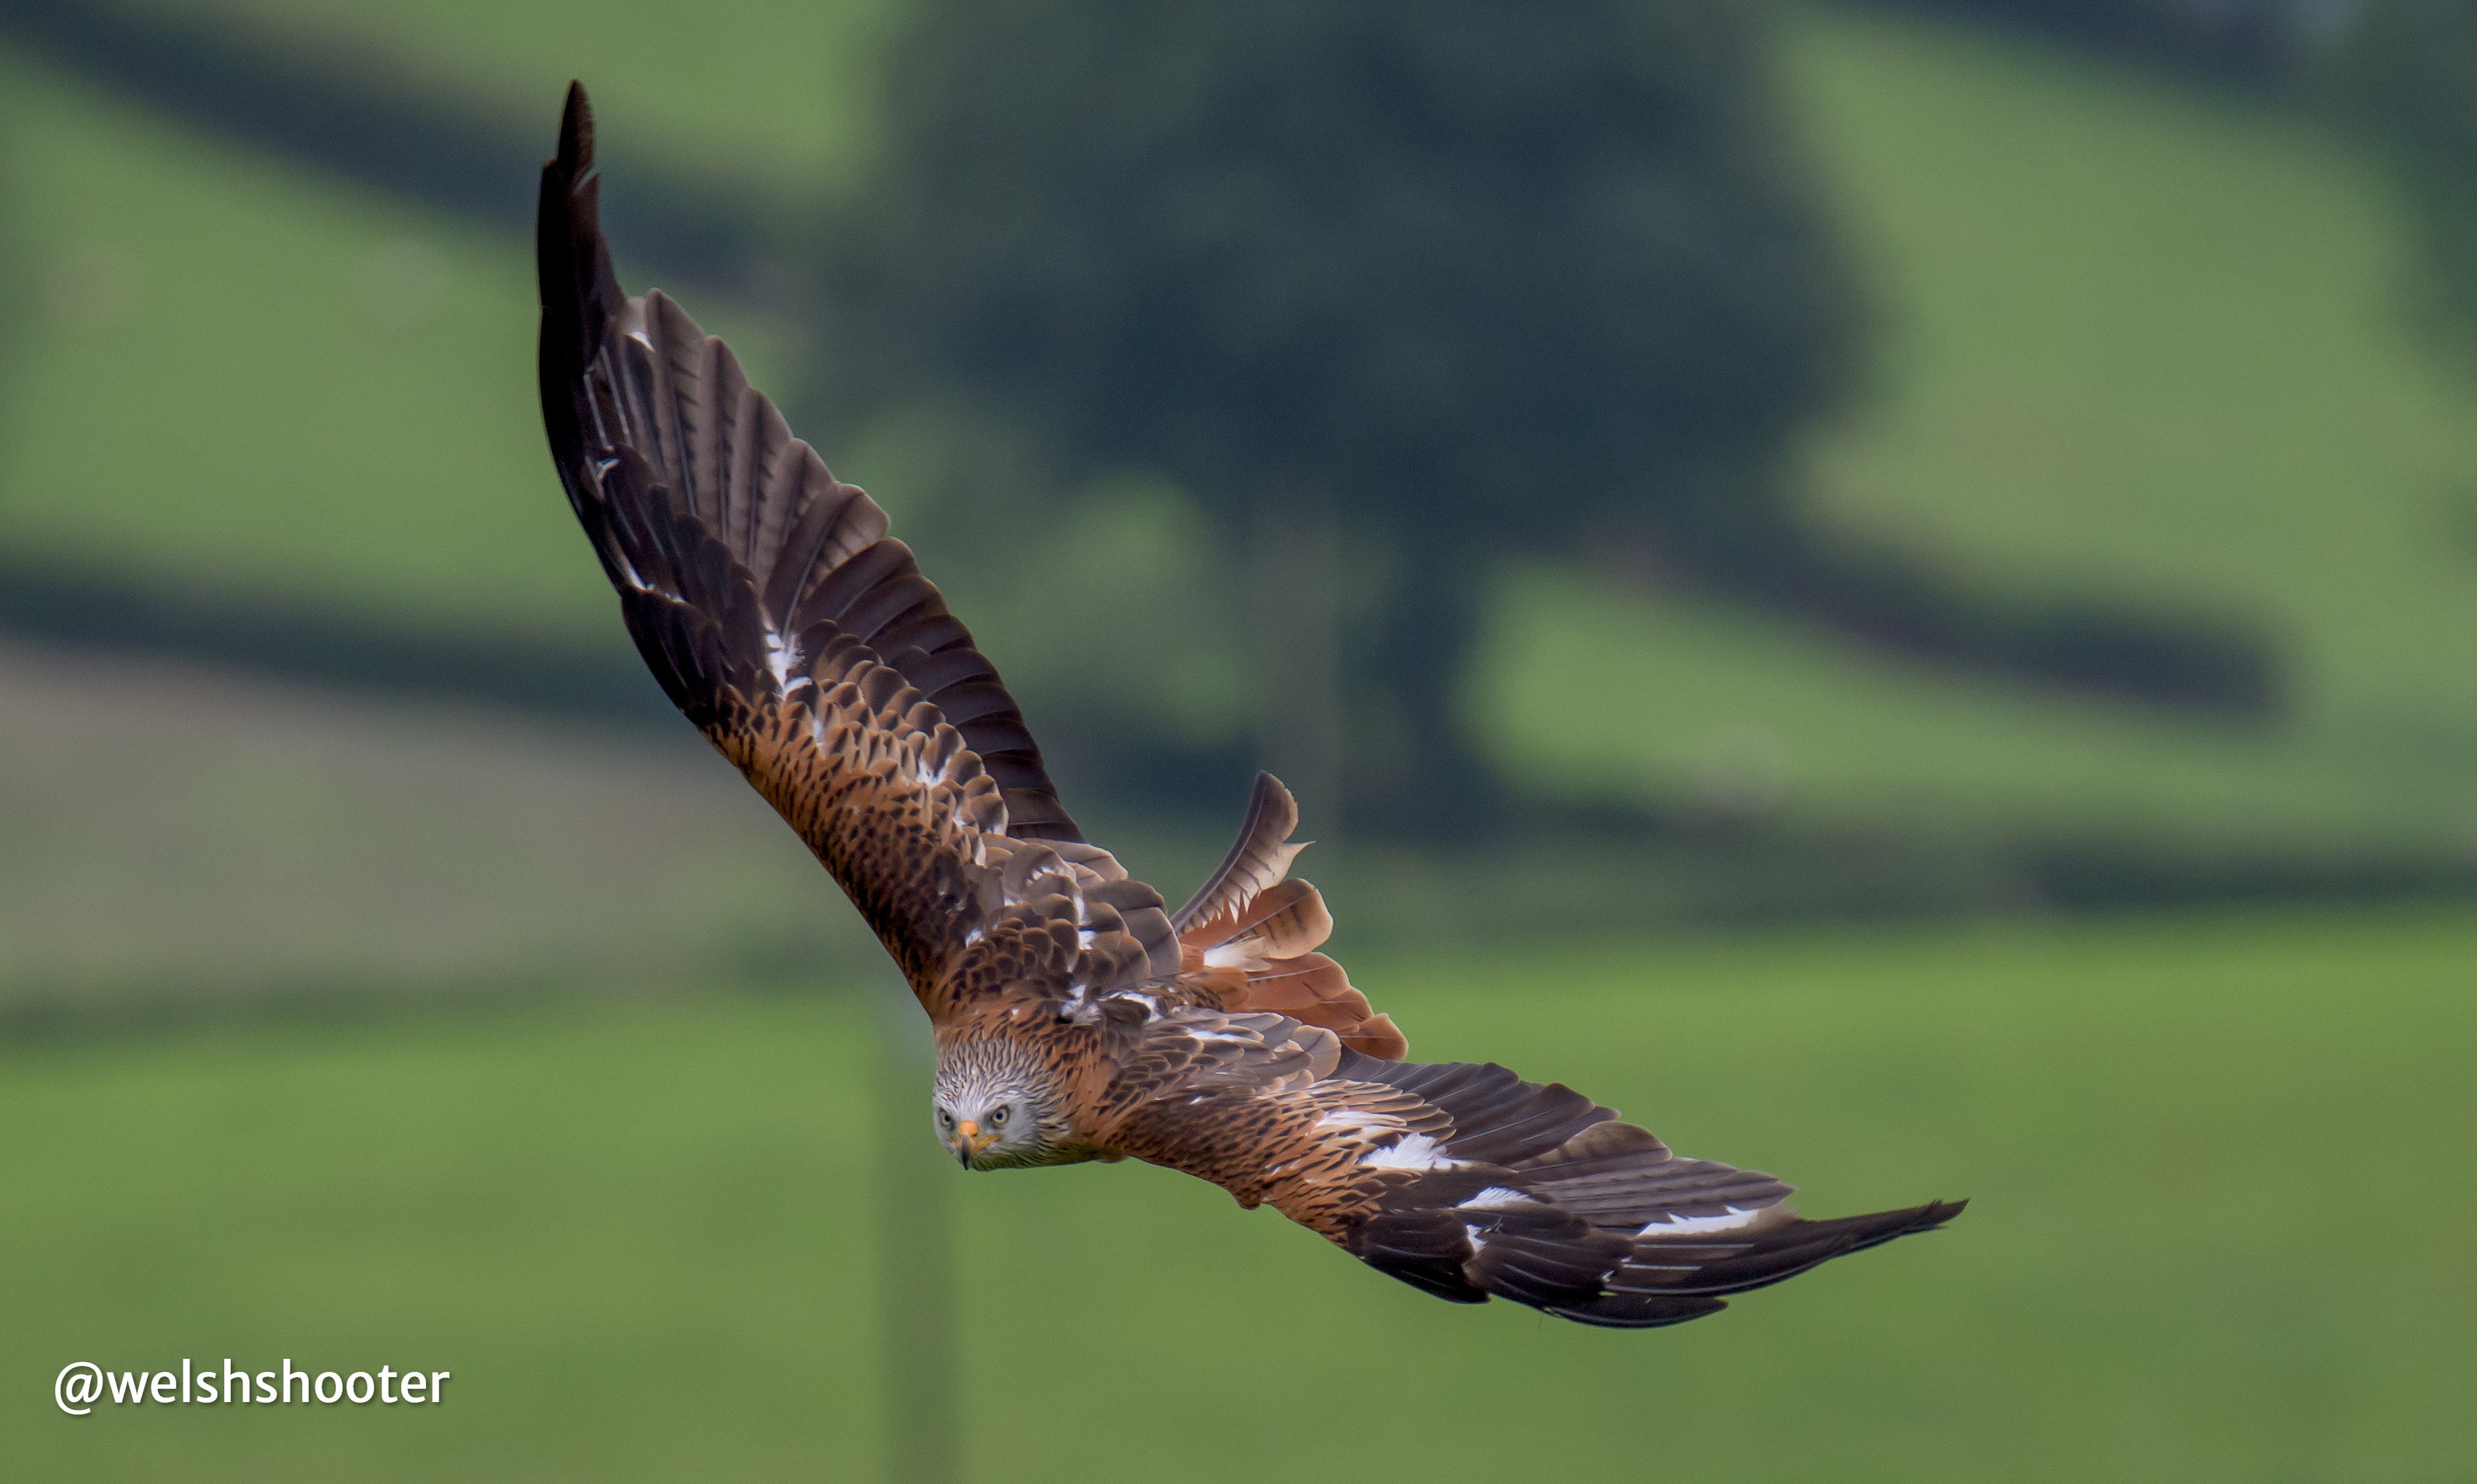 British Bird Of Prey Centre Wales  Flying Experiences Carmarthenshire